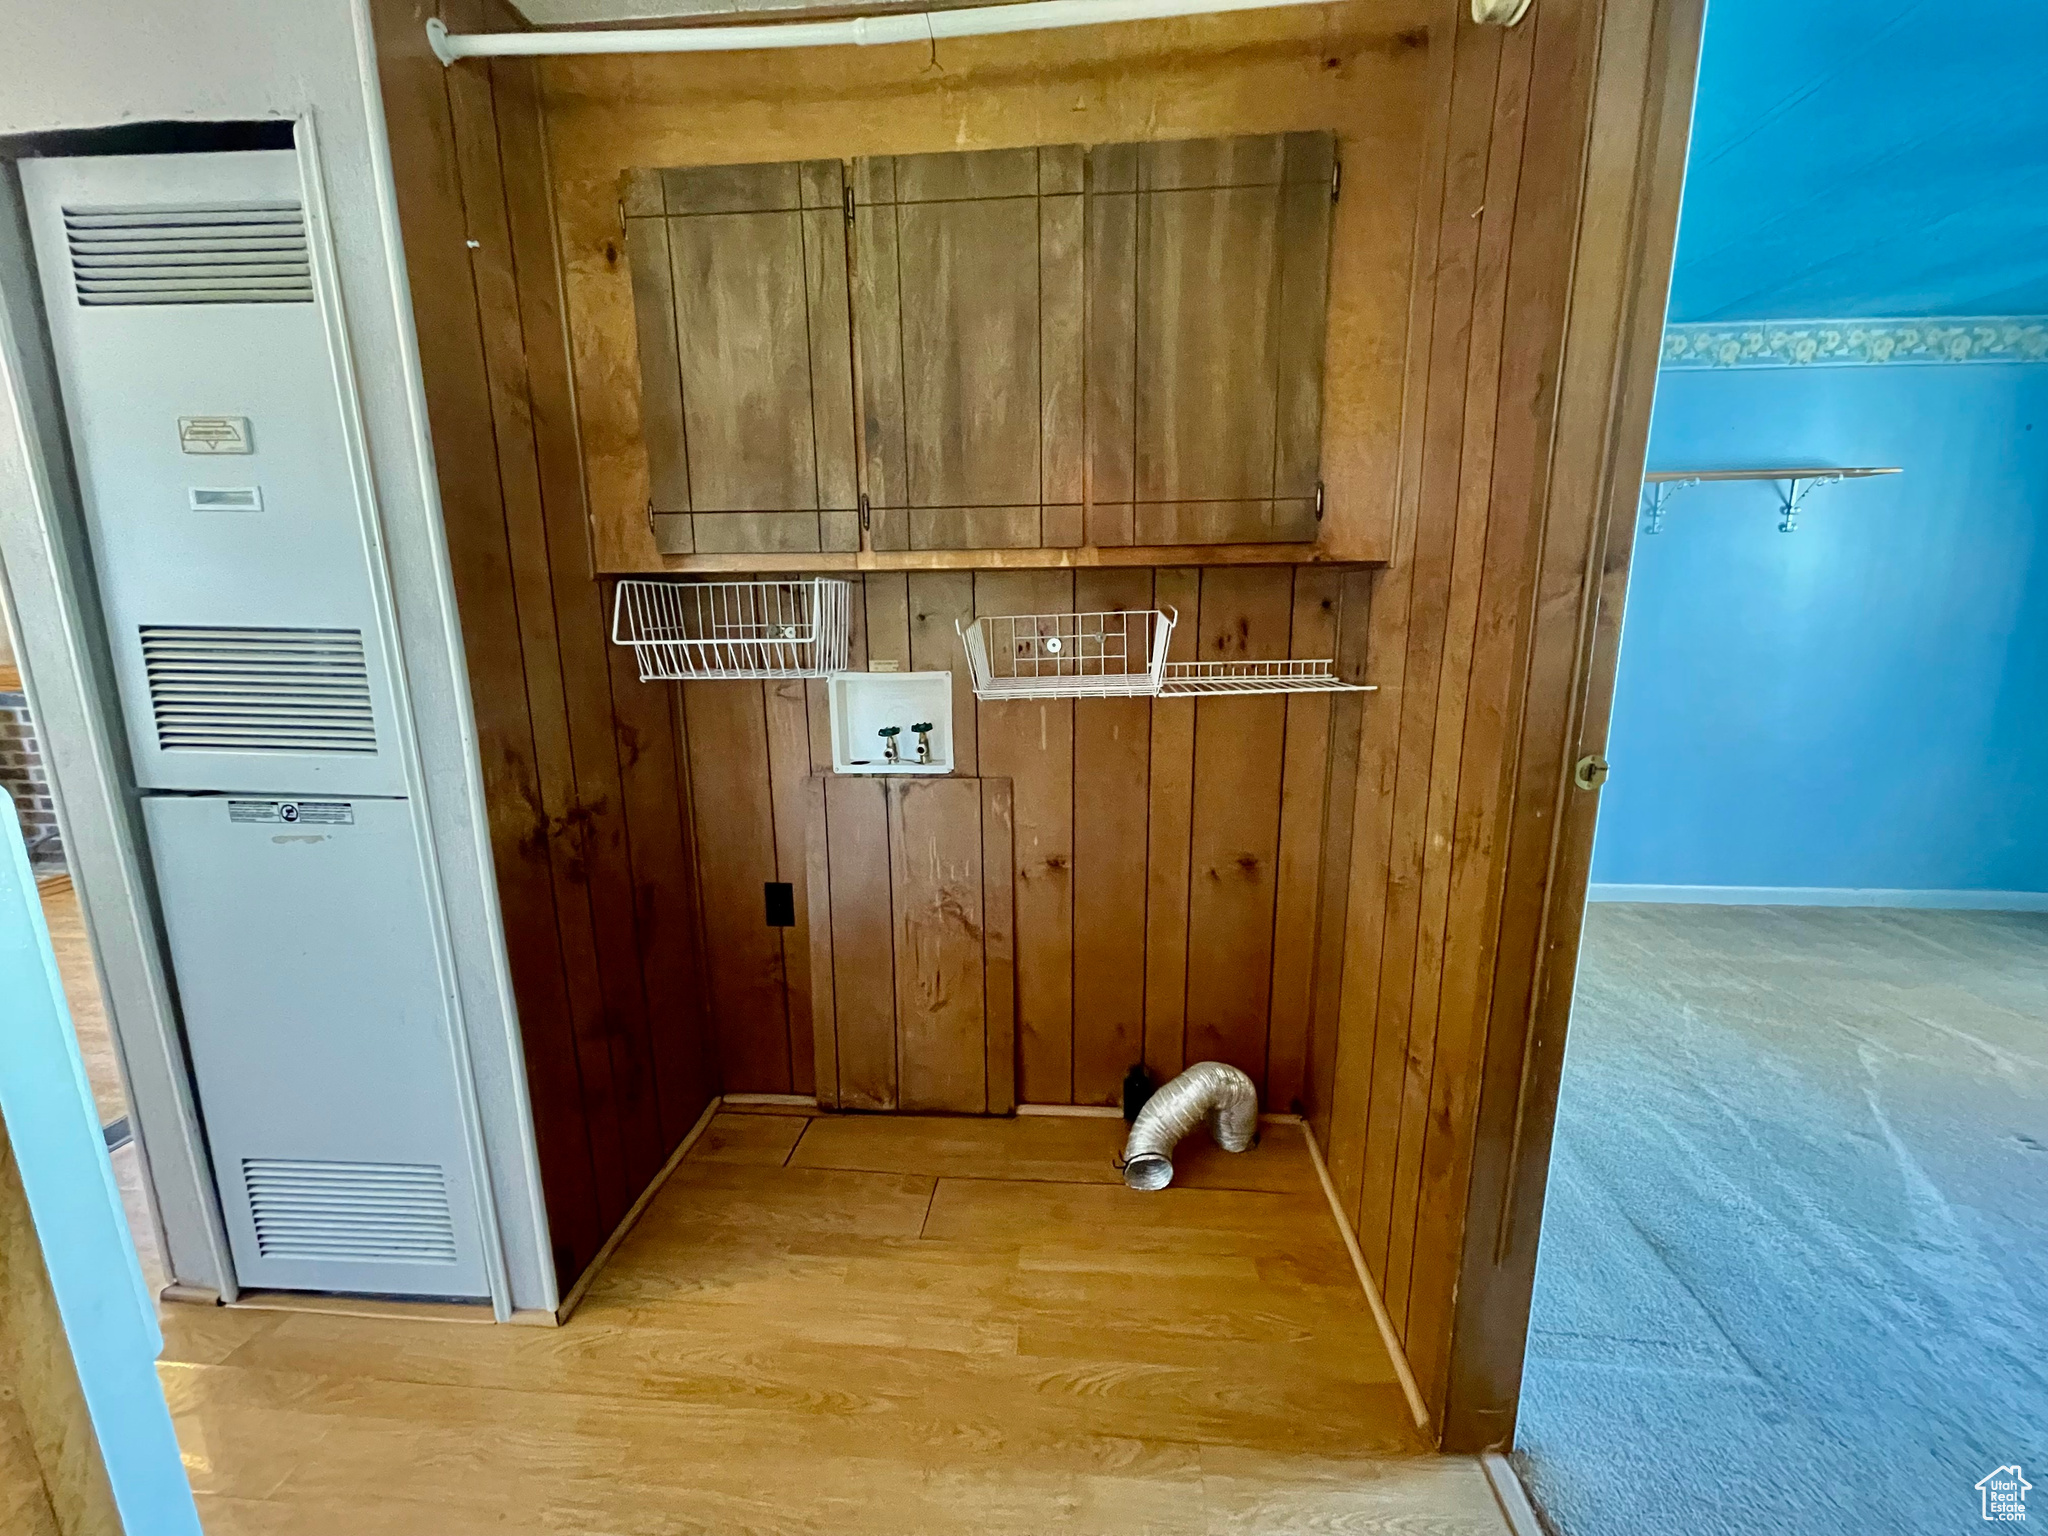 Washroom with hookup for a washing machine, wood walls, and light hardwood / wood-style floors